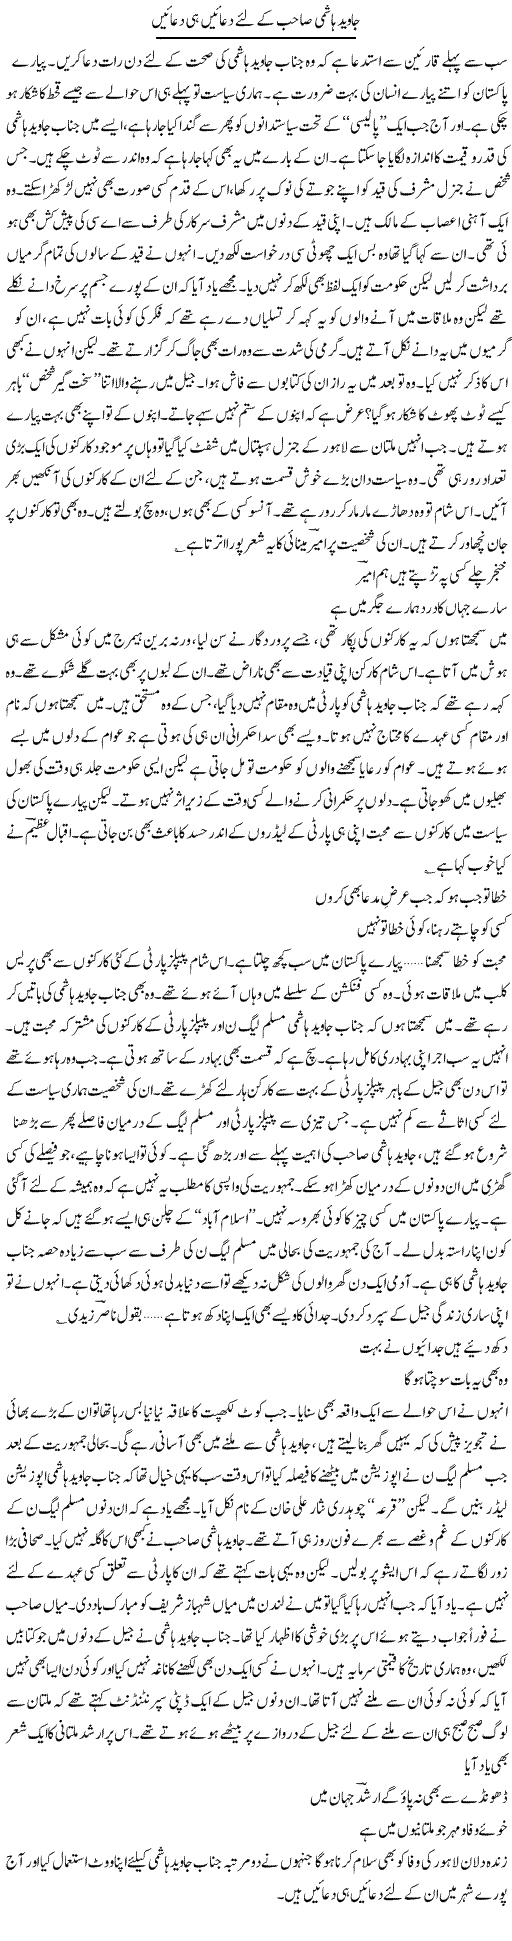 Javed Hashmi Sahab Express Column Ijaz Hafeez 26 July 2010